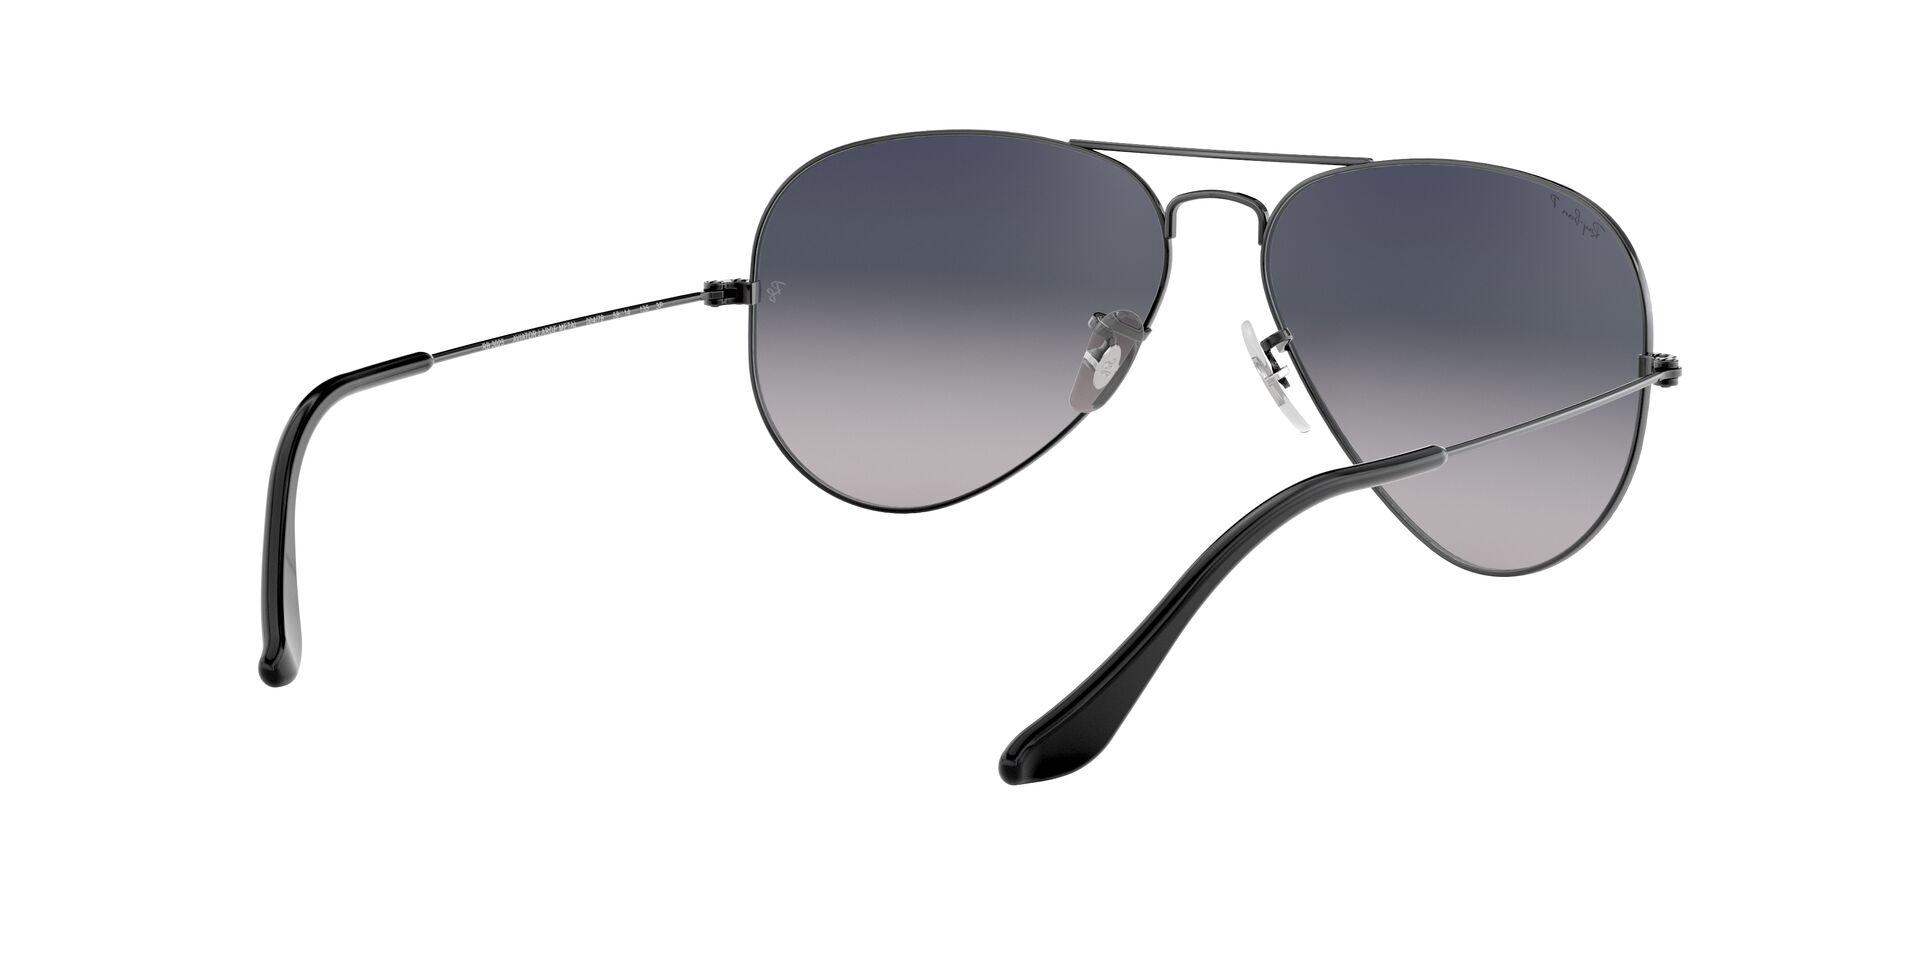 Mắt Kính Ray-Ban Aviator Large Metal - RB3025 004/78 -Sunglasses